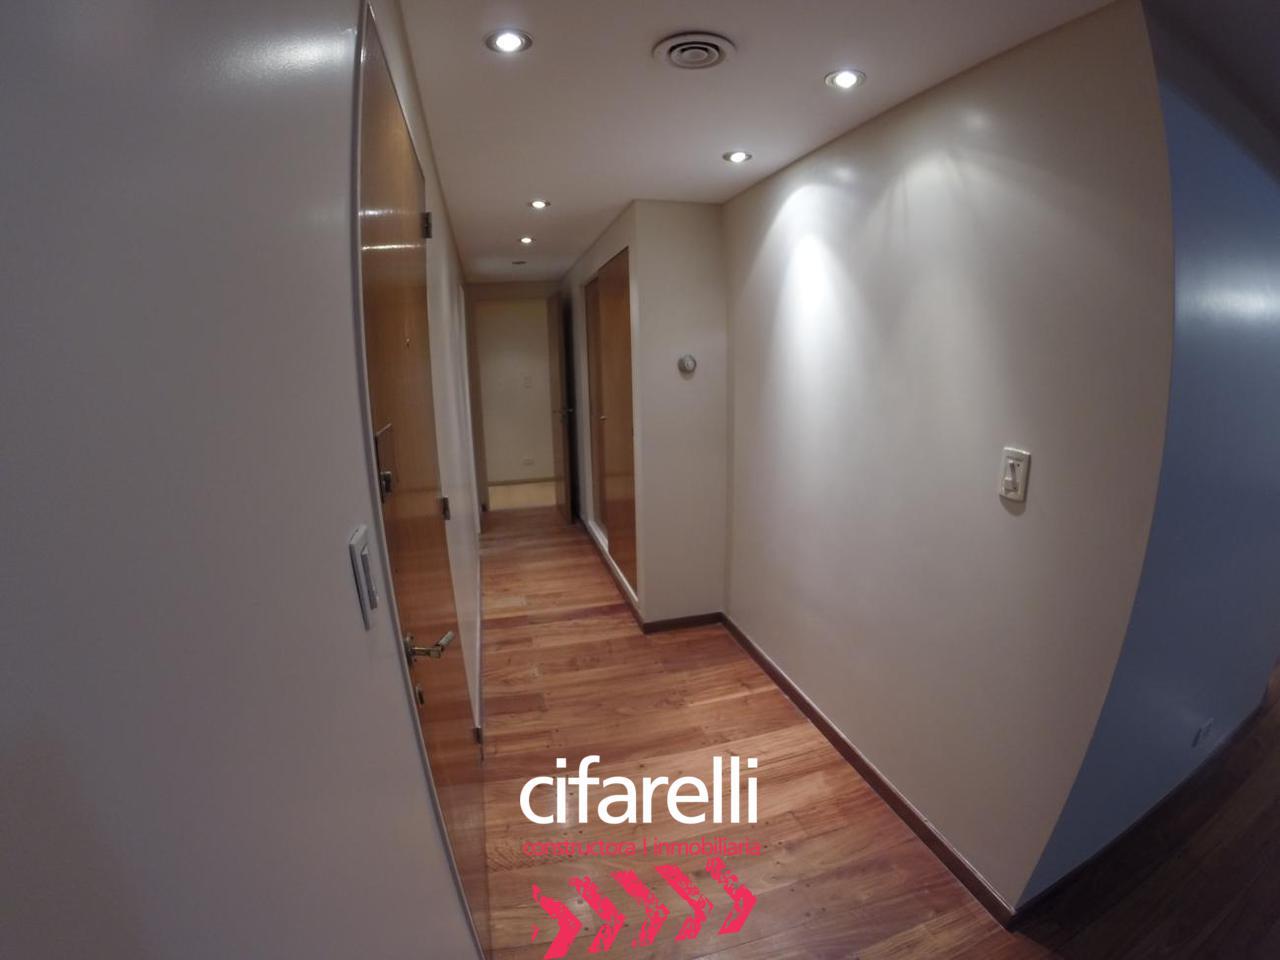 #5321418 | Alquiler | Departamento | Palermo (Cifarelli | Constructora - Inmobiliaria)